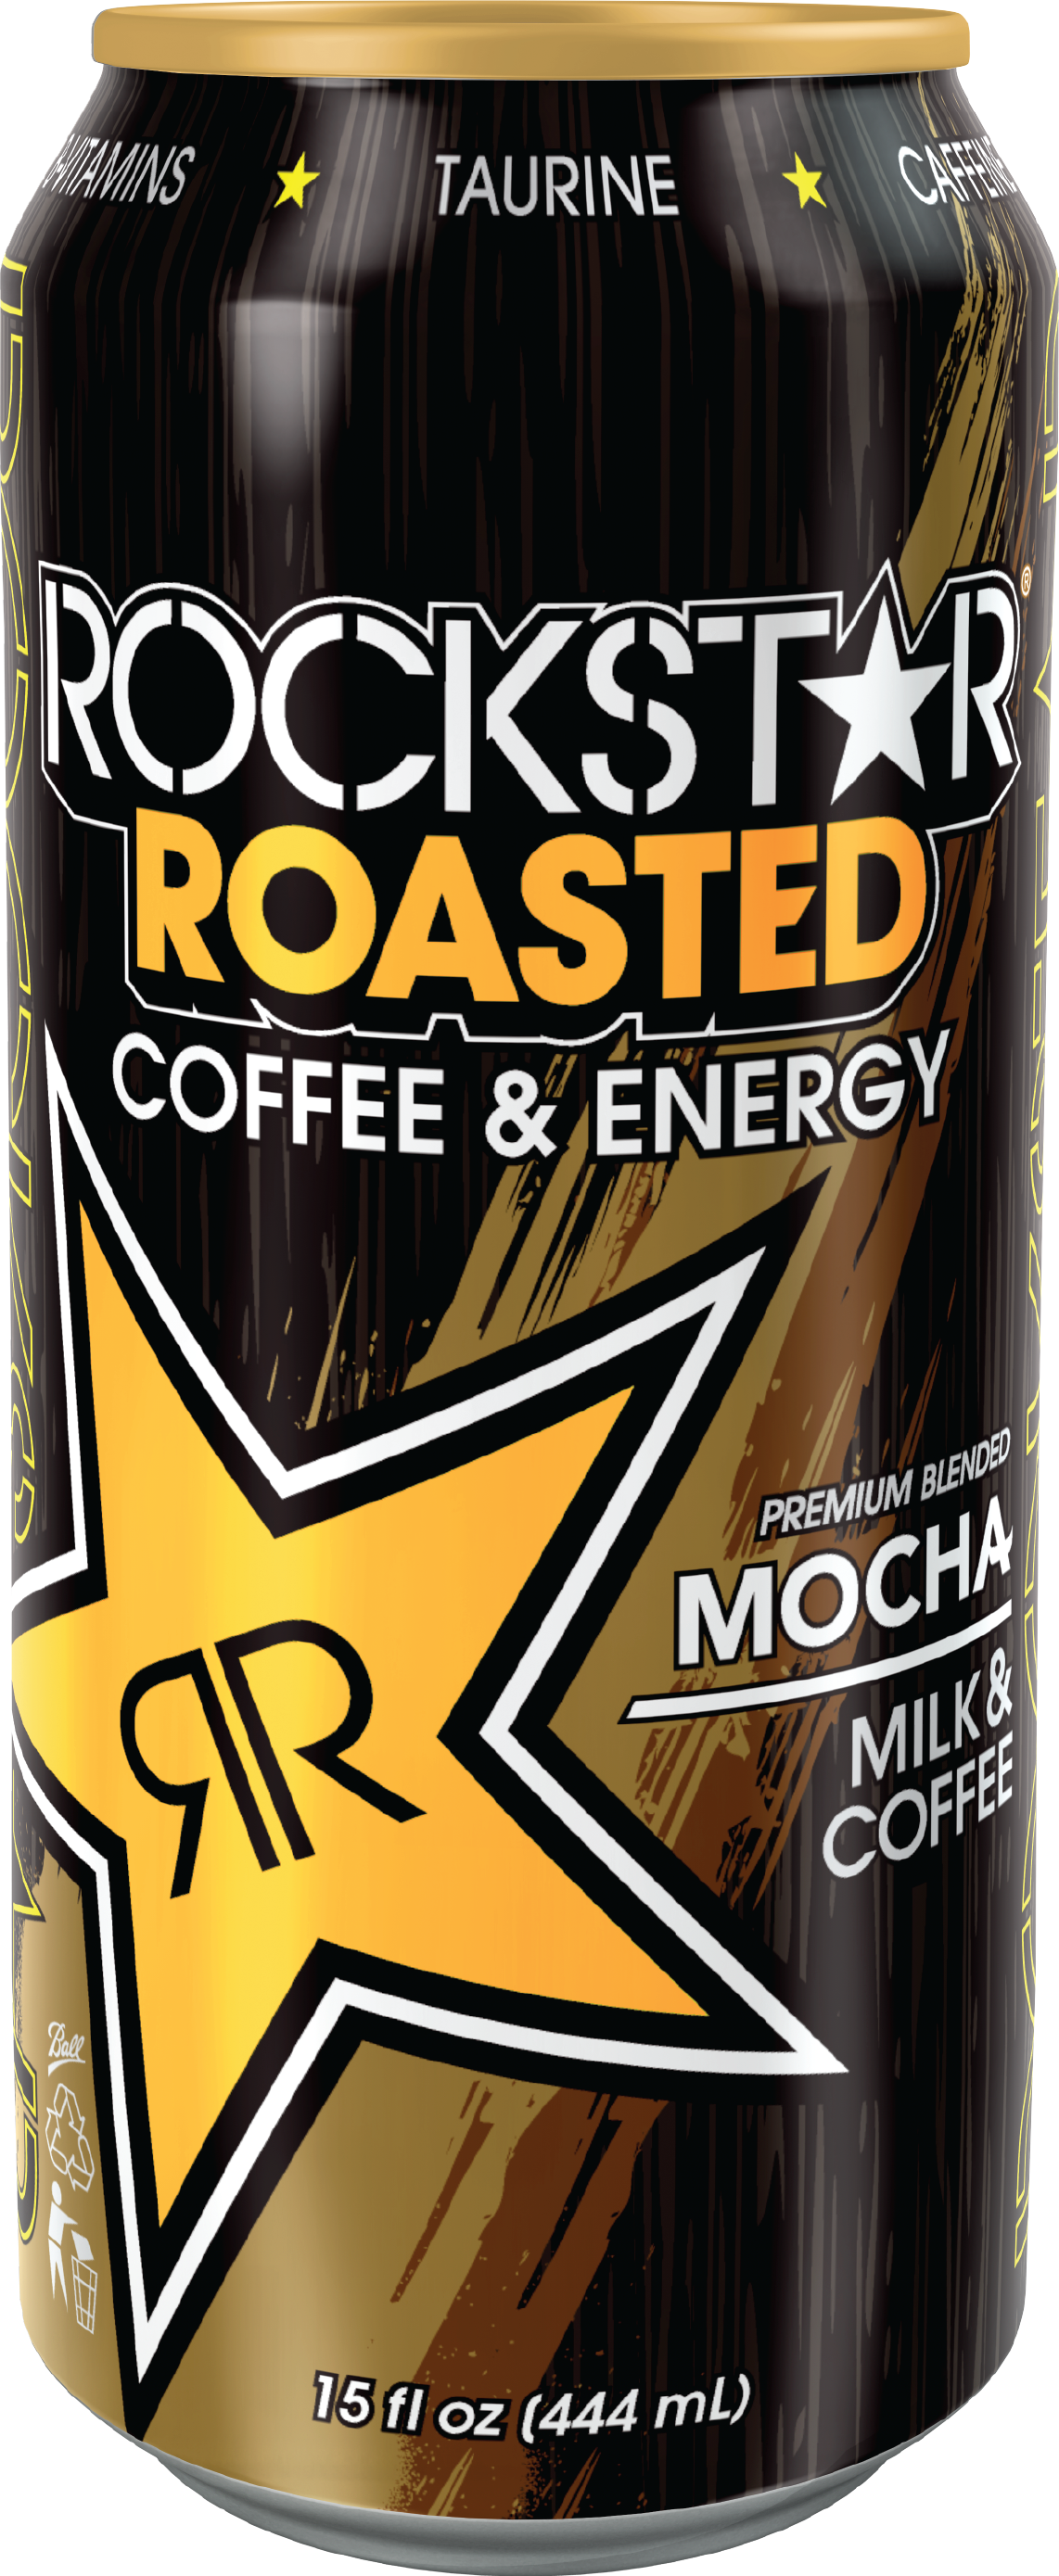 Rockstar Roasted Coffee Energy Drink Can